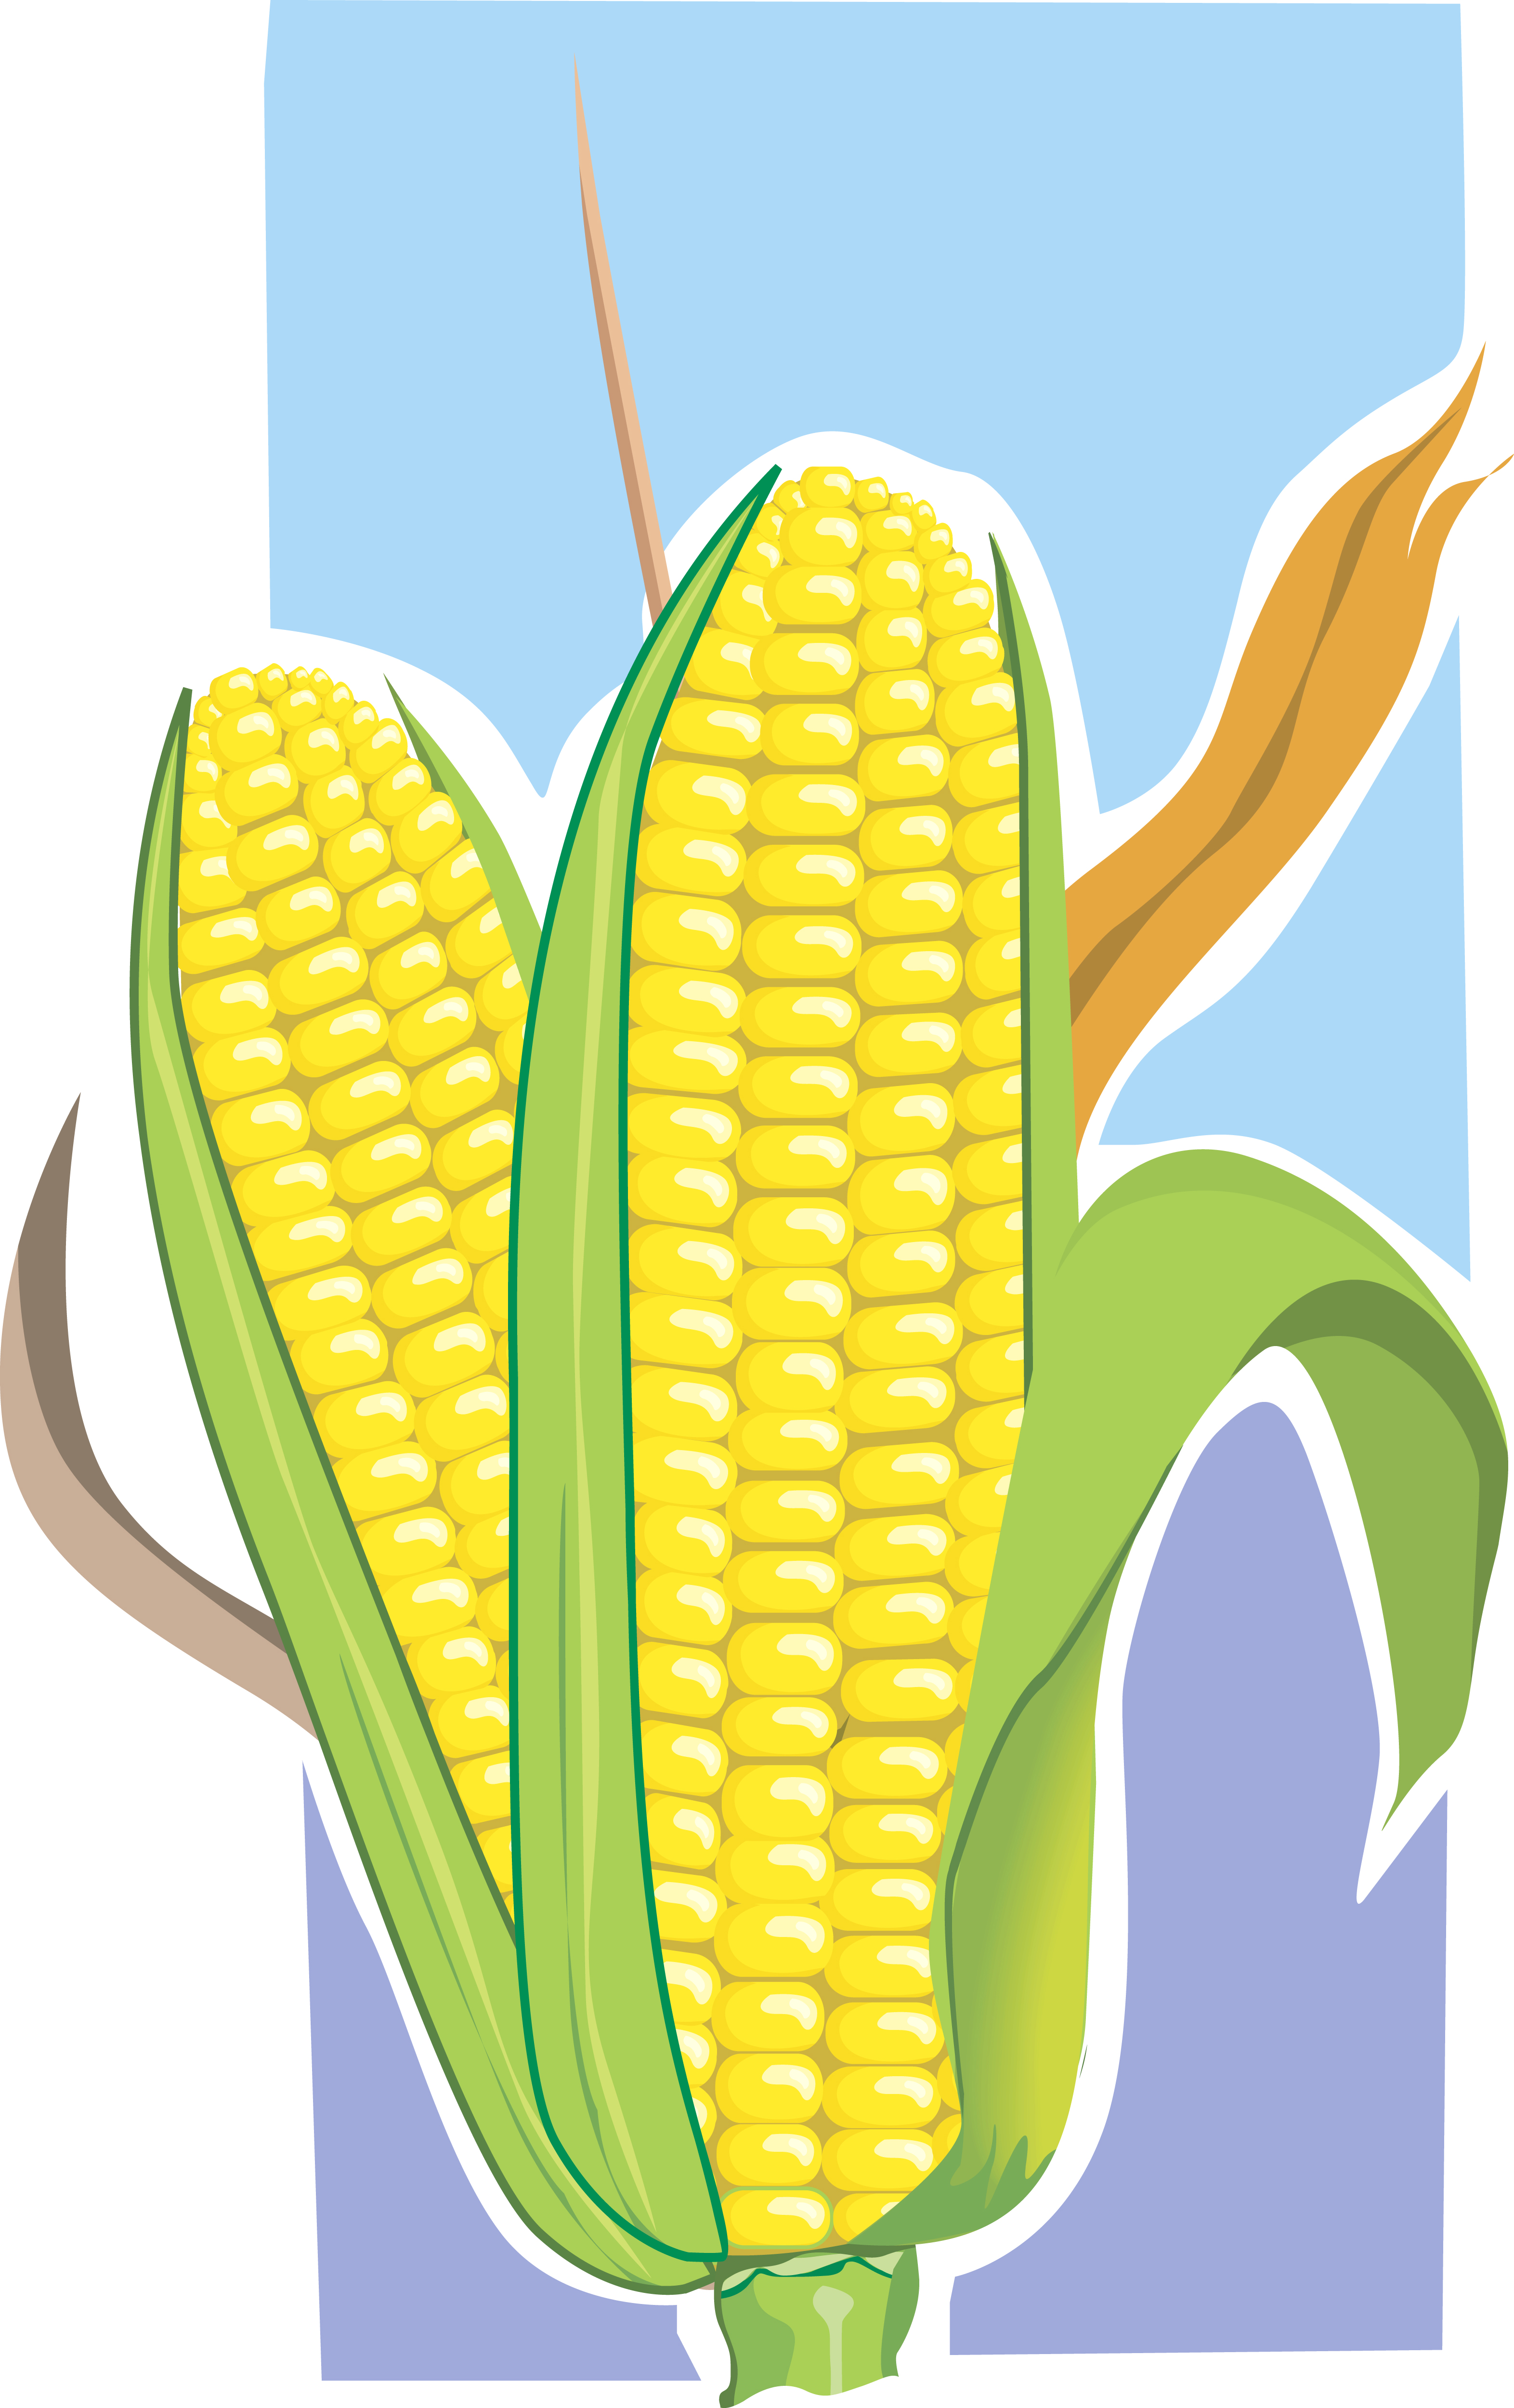 Maize illustration photo